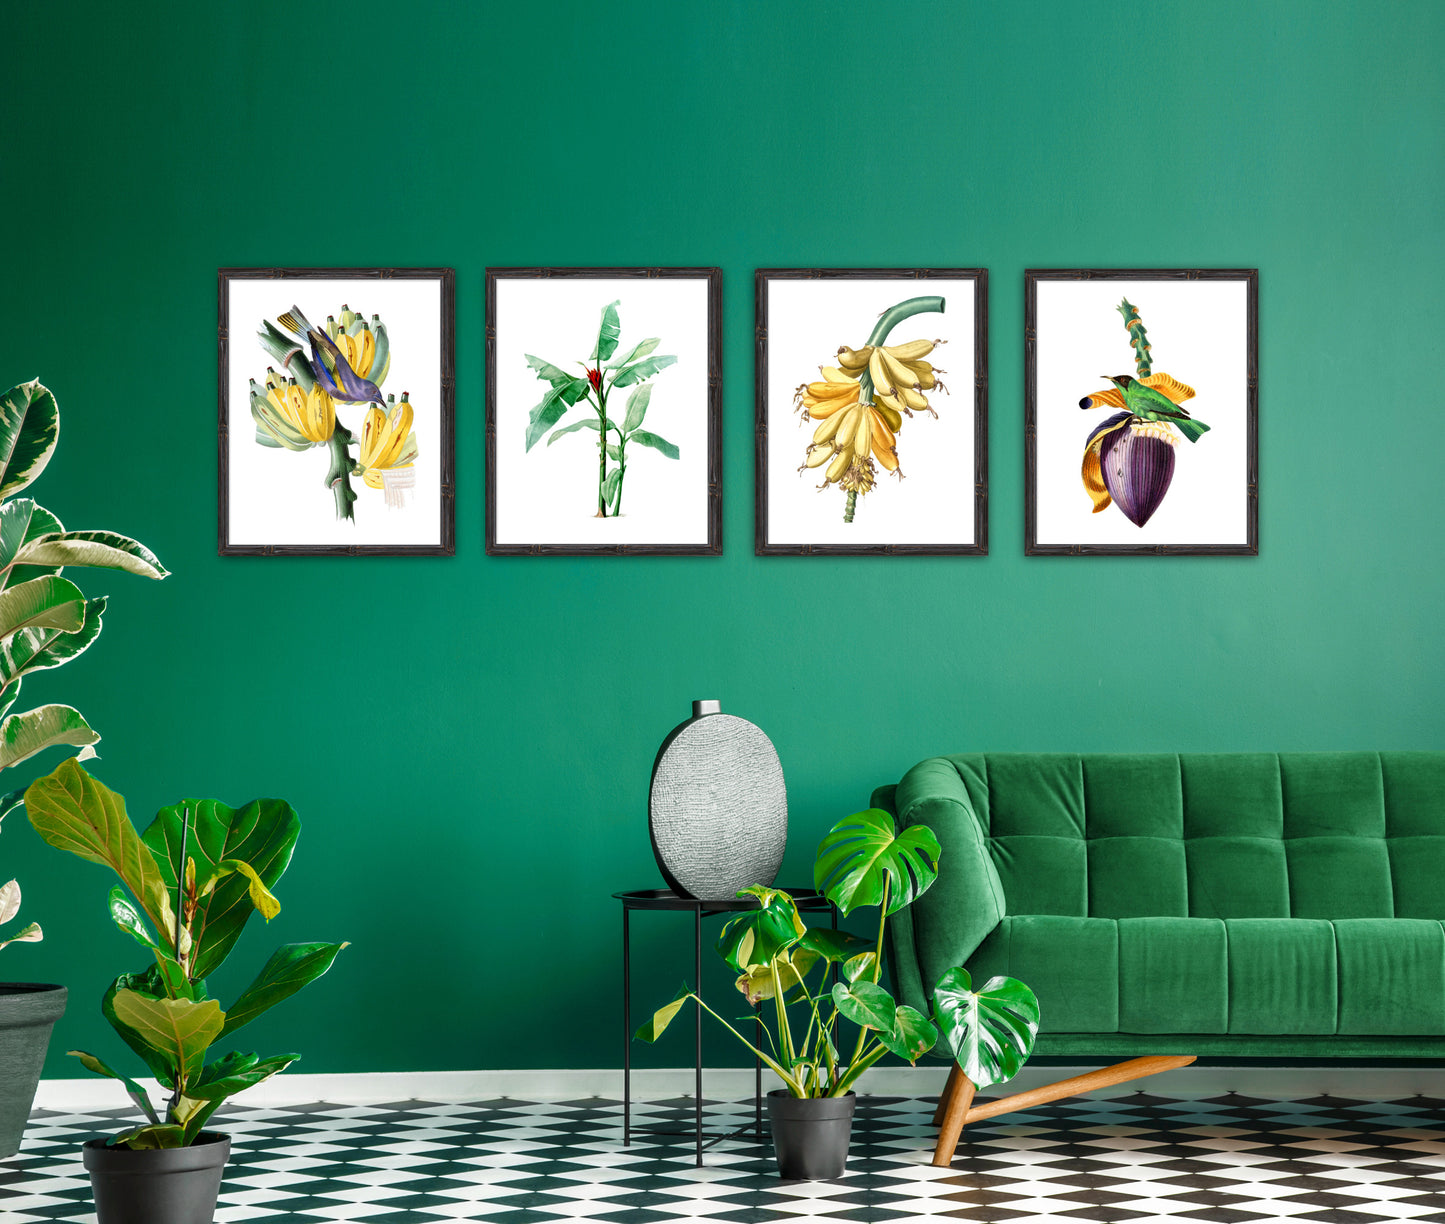 green room with vintage banana themed prints